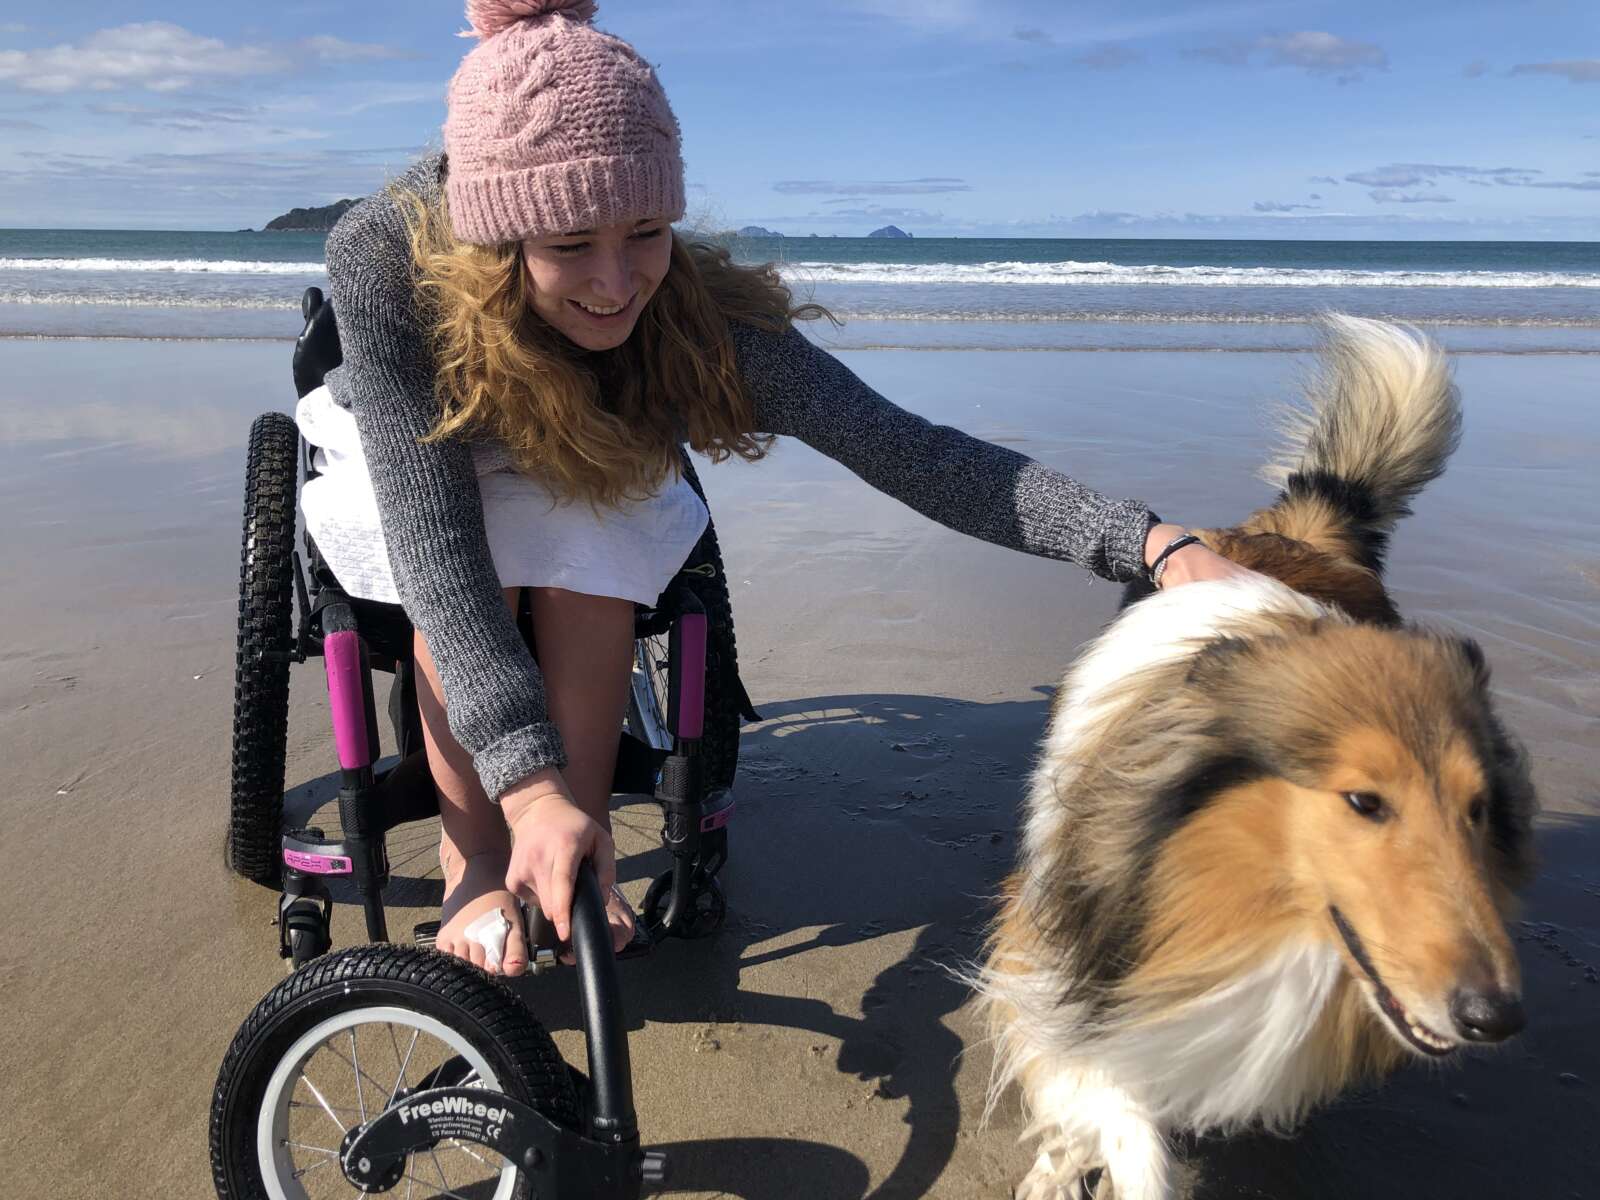 Pieta in her beach wheelchair leans to pat dog